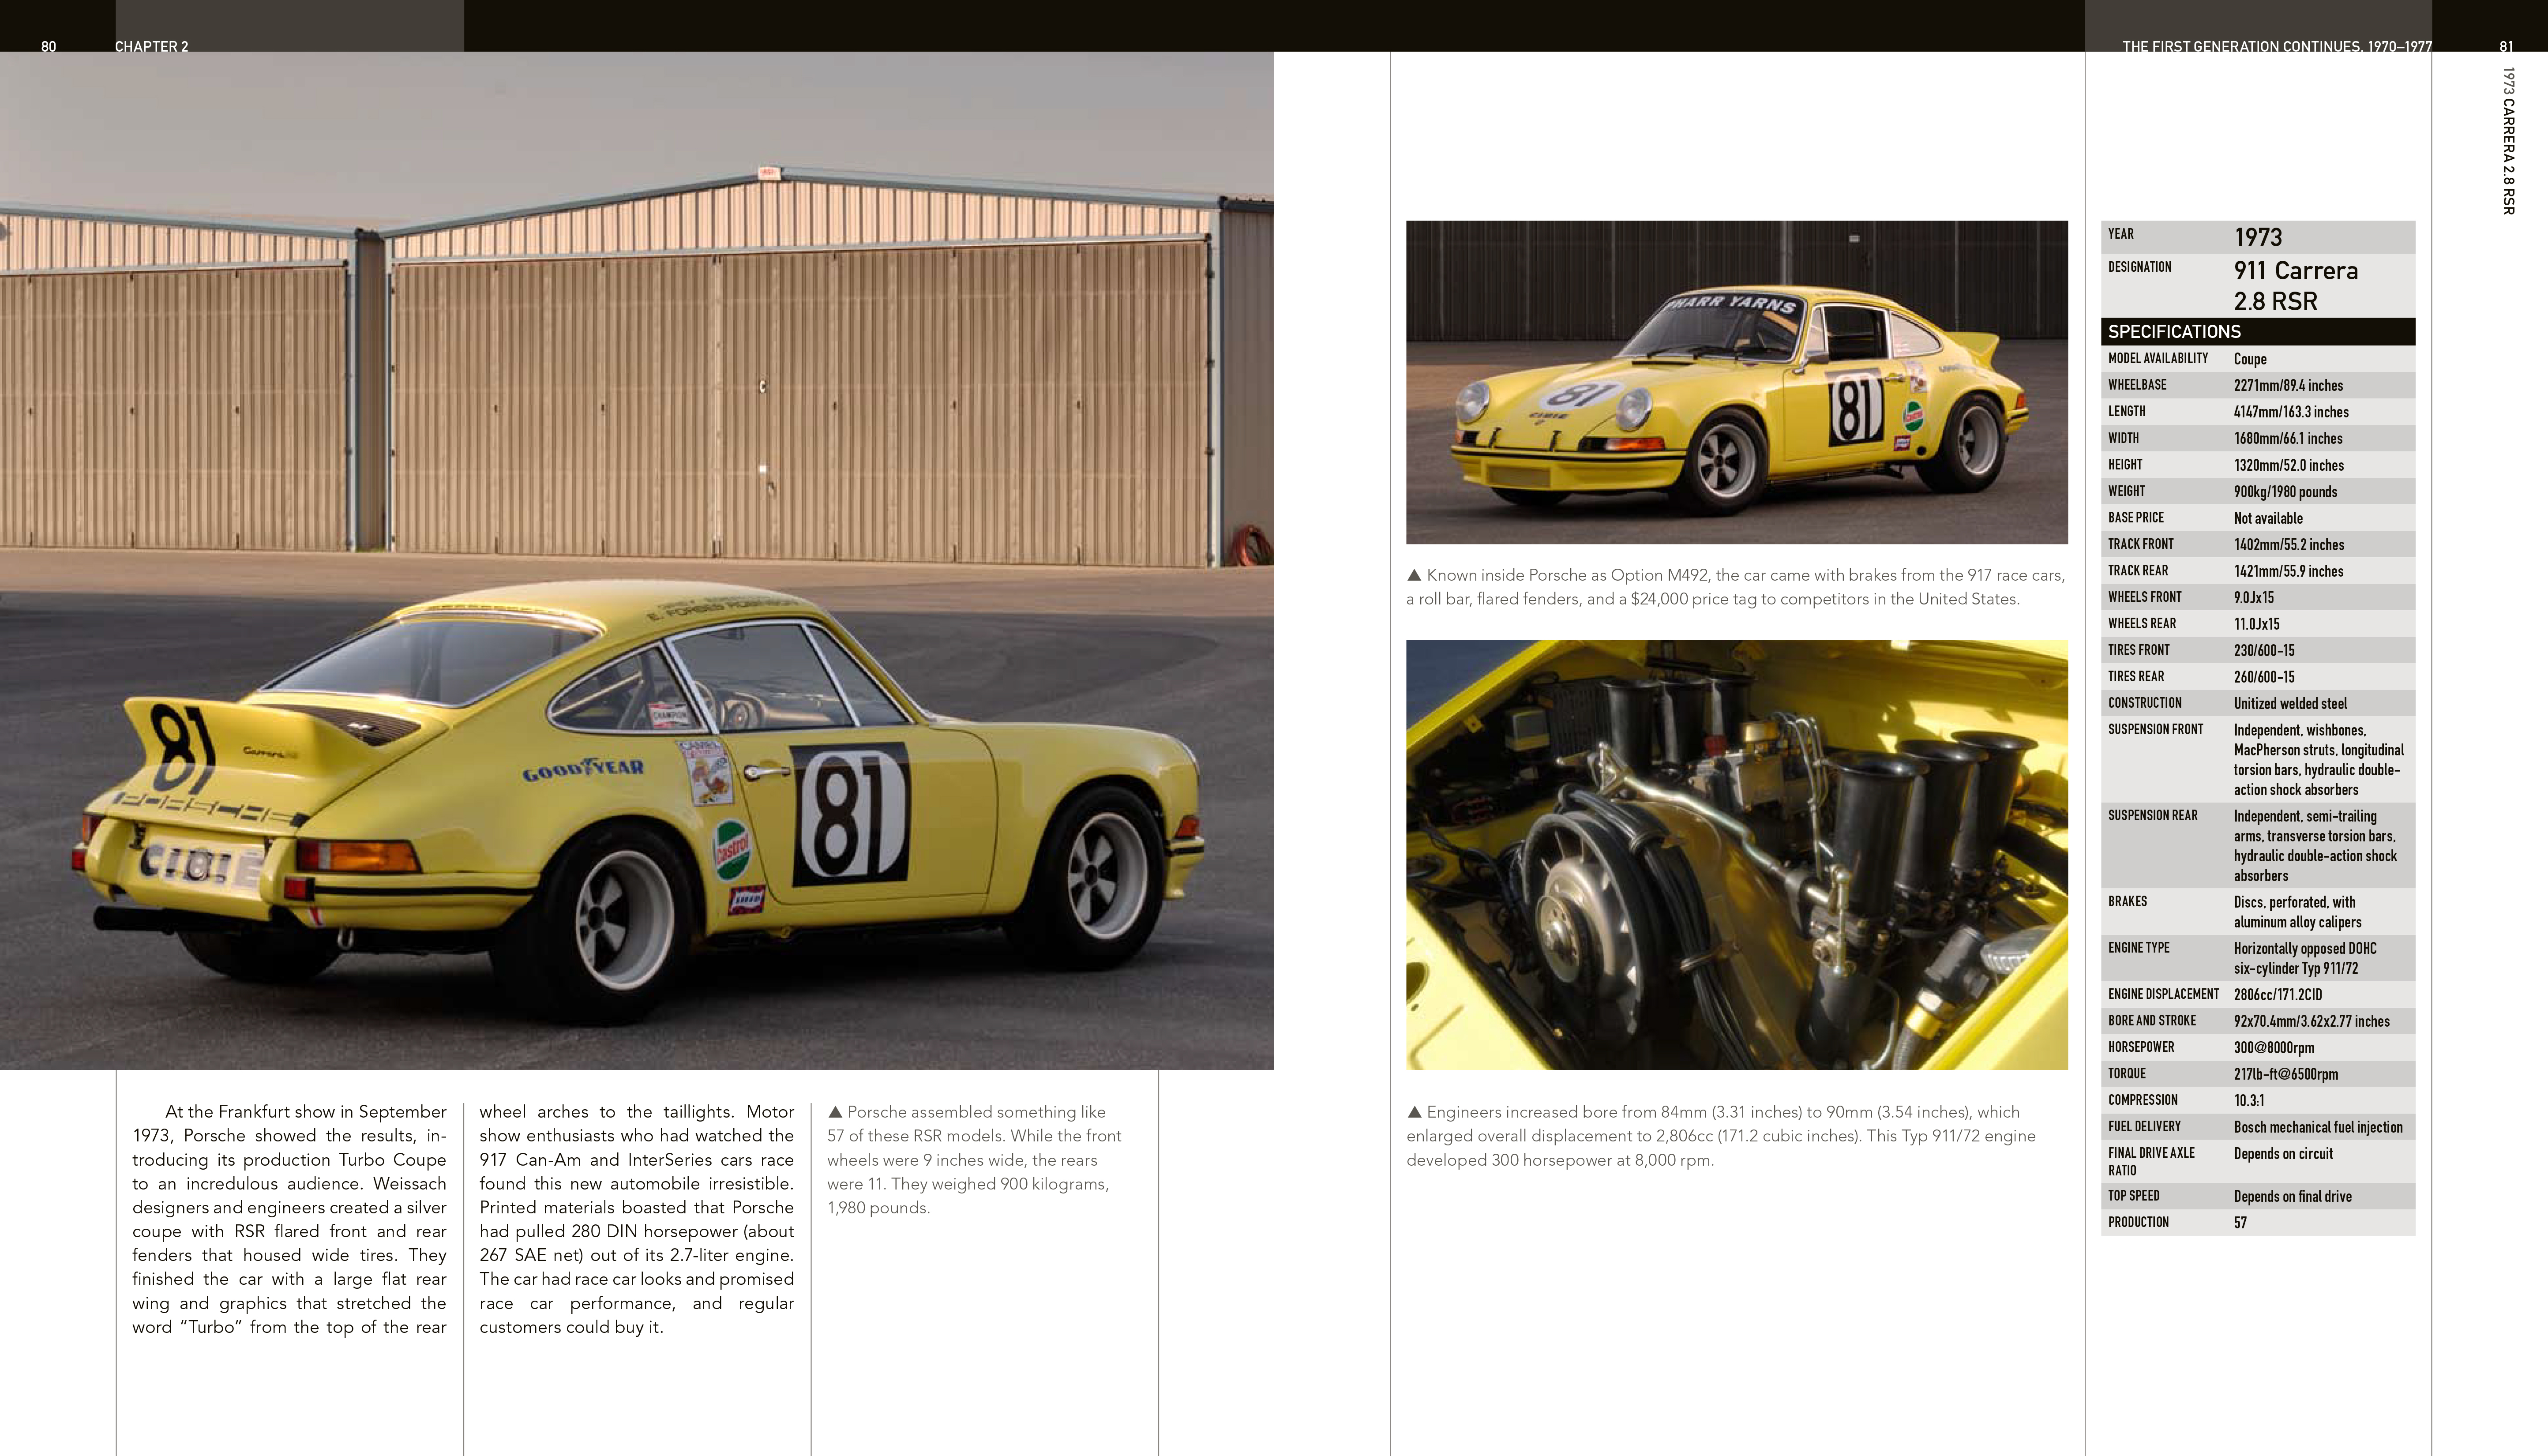 The Complete Book of Porsche 911